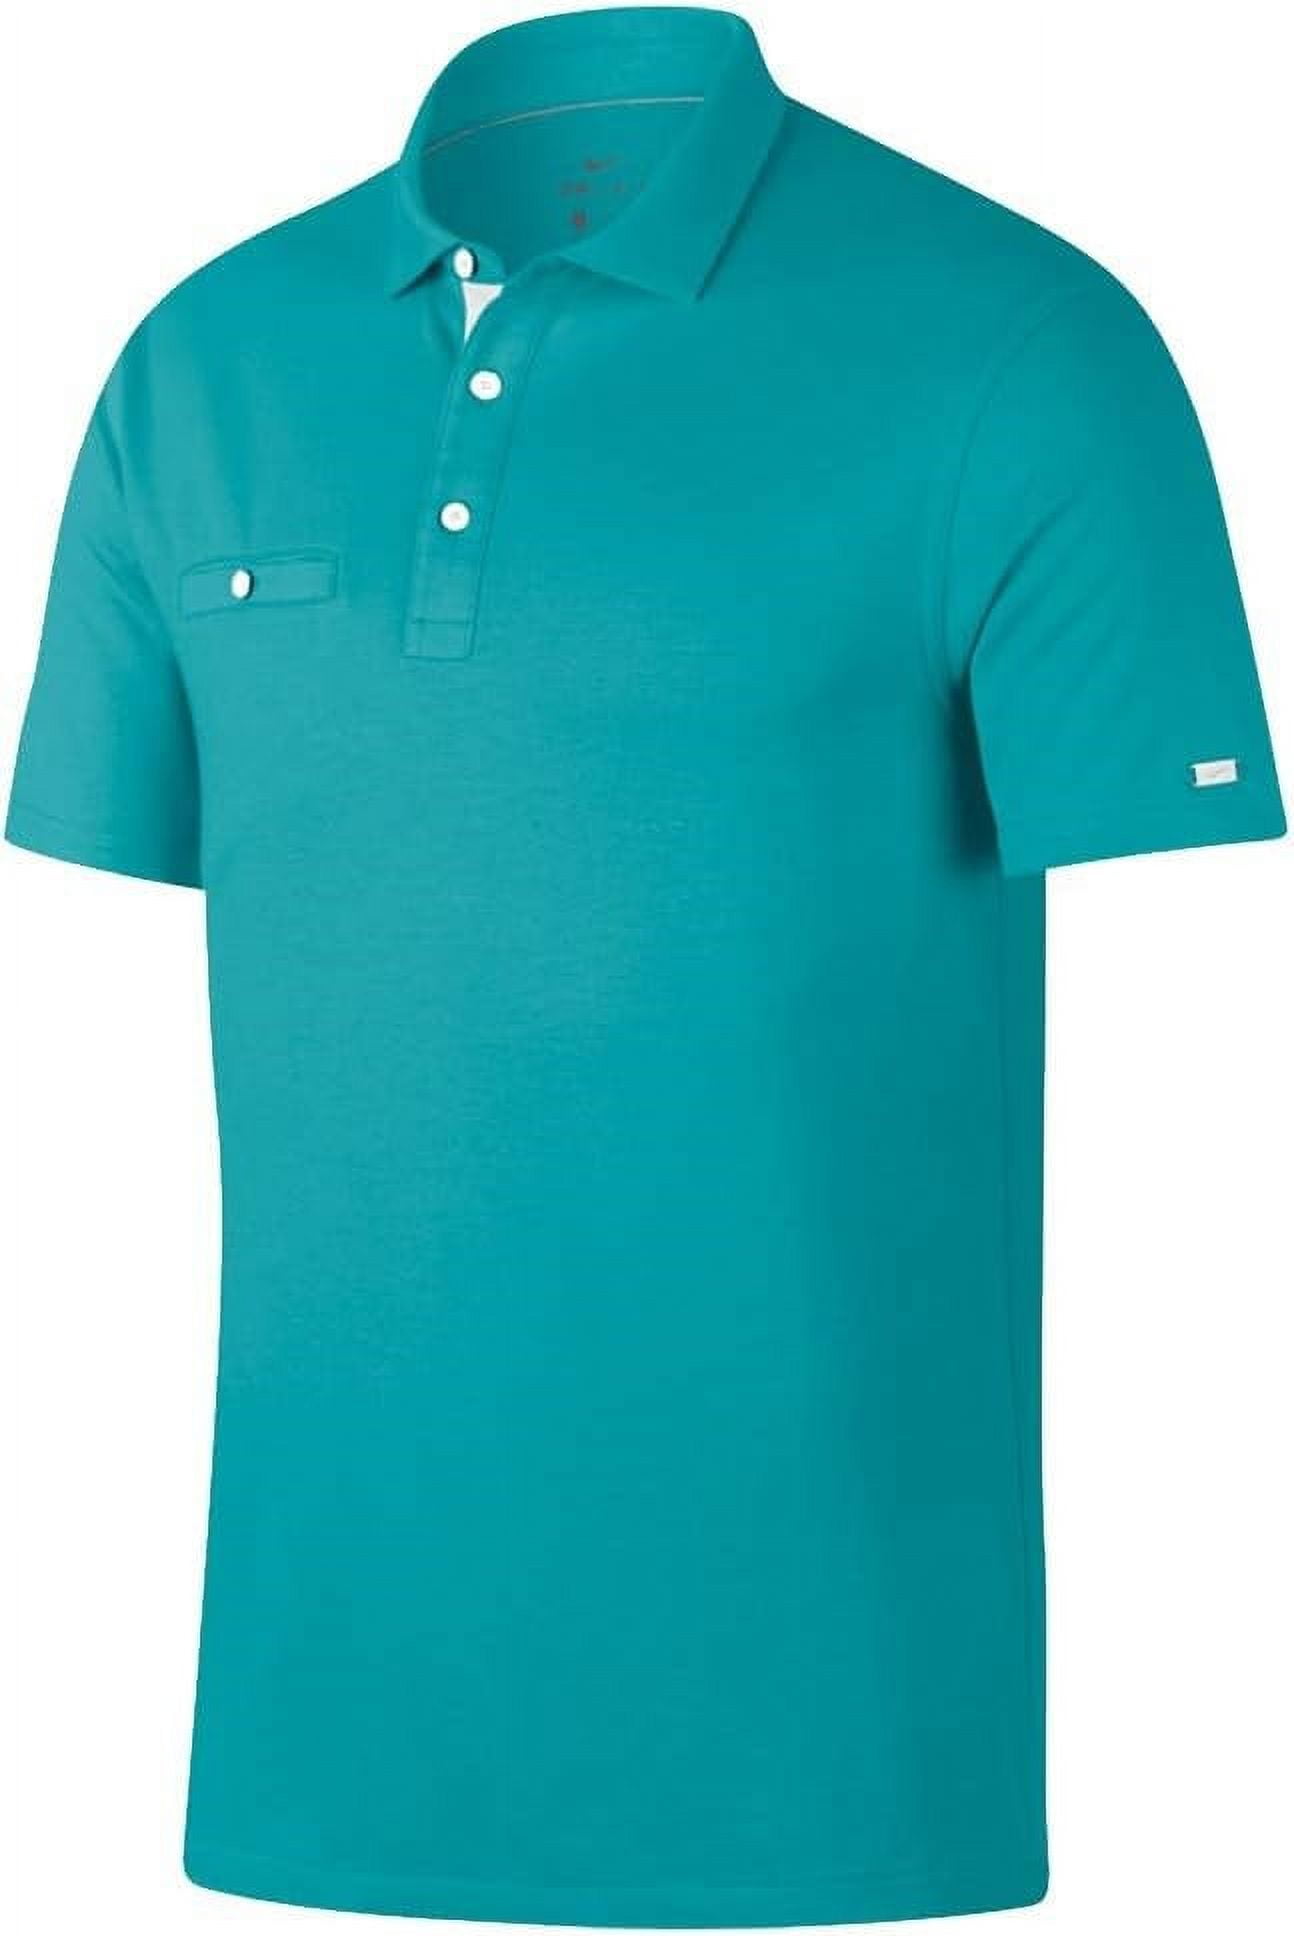 Nike Men's Dri Fit Short Sleeve Golf Polo Cabana Blue Size XL - Walmart.com